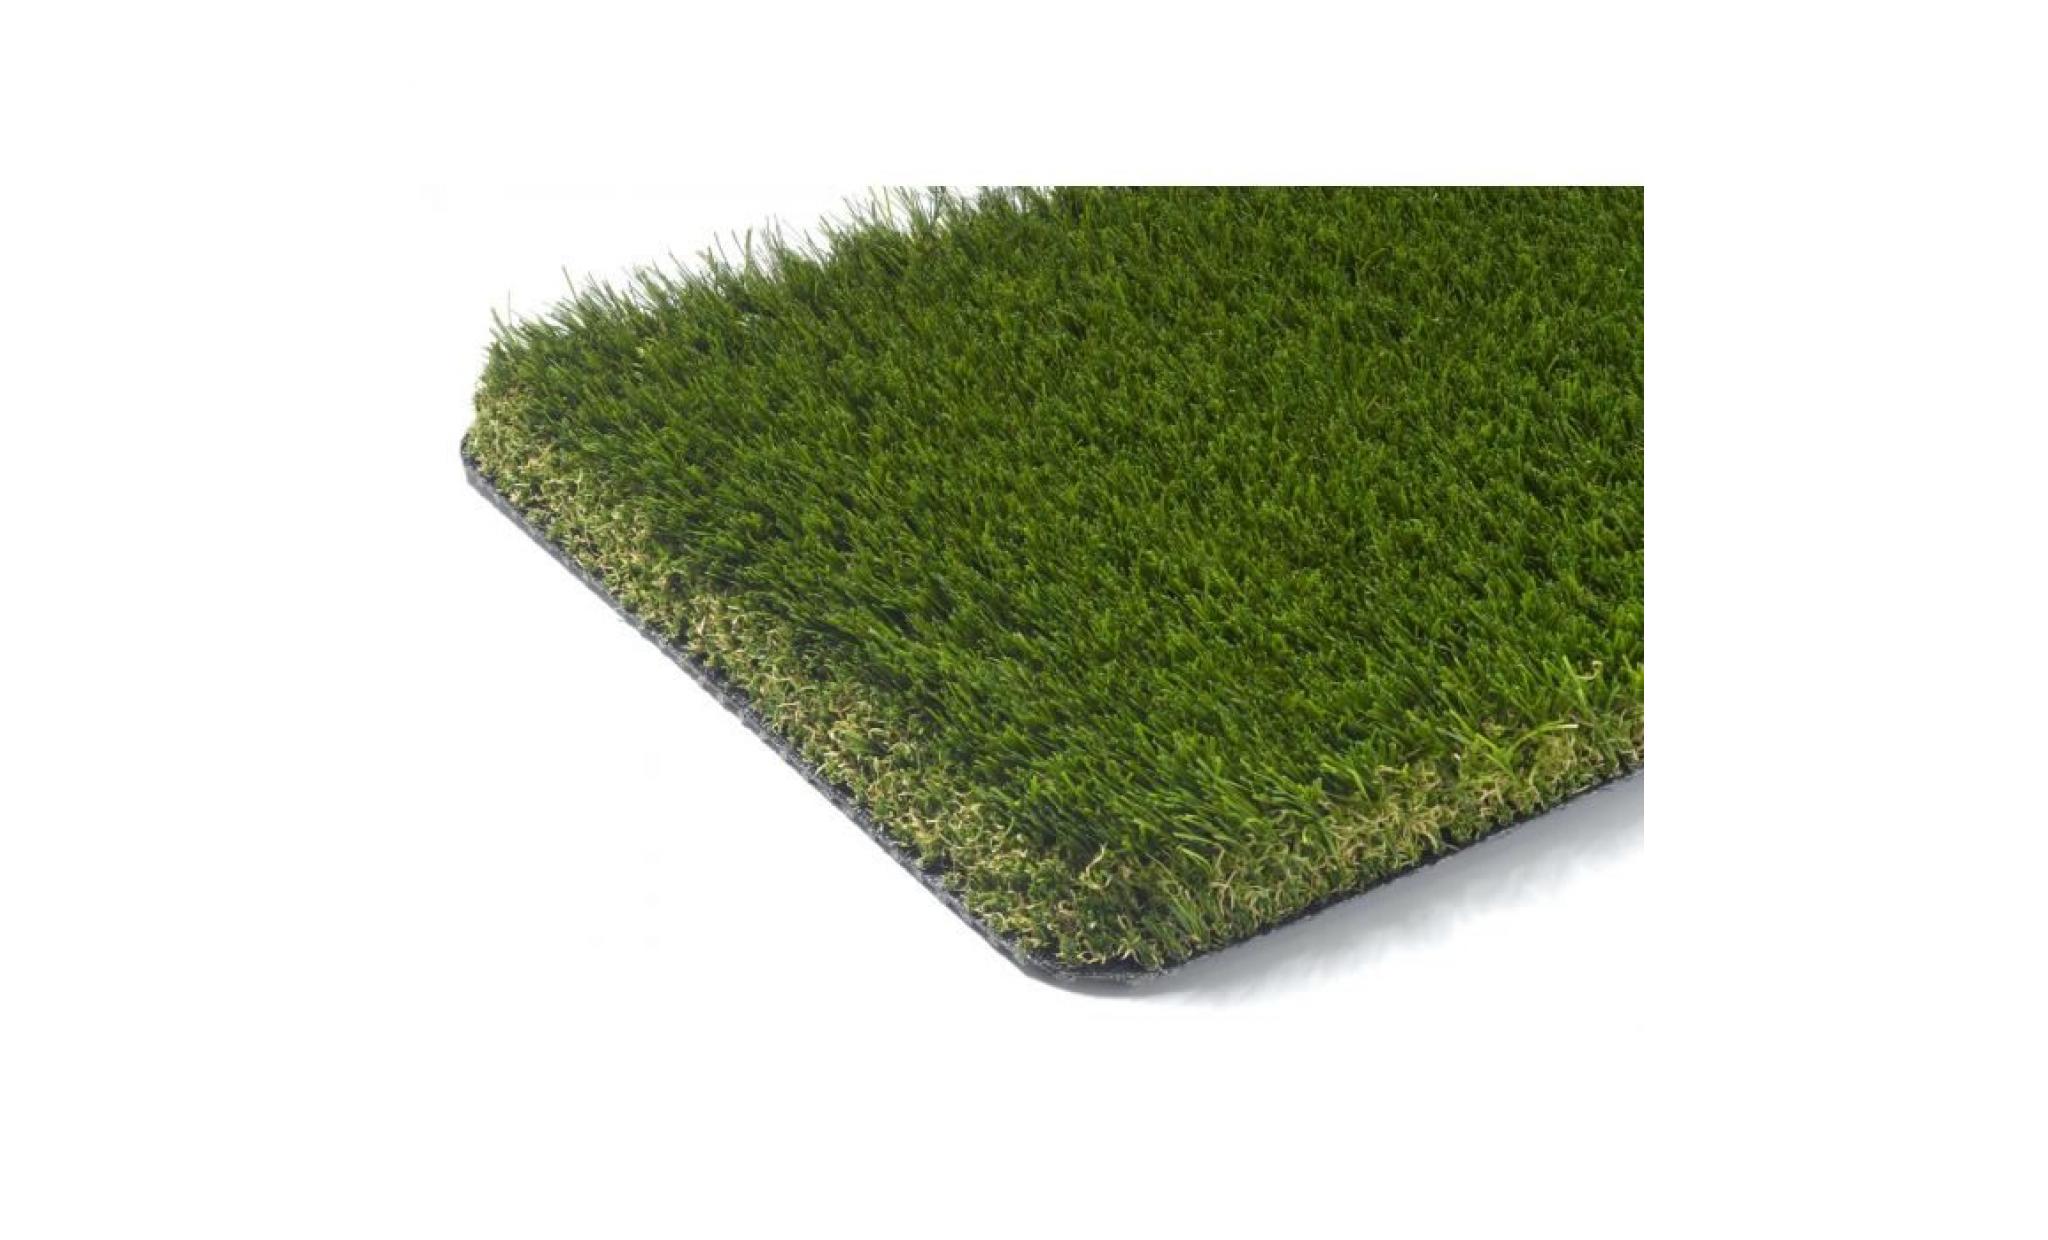 buckingham   tapis type luxe gazon artificiel – pour jardin, terrasse, balcon   vert  [400x50 cm]